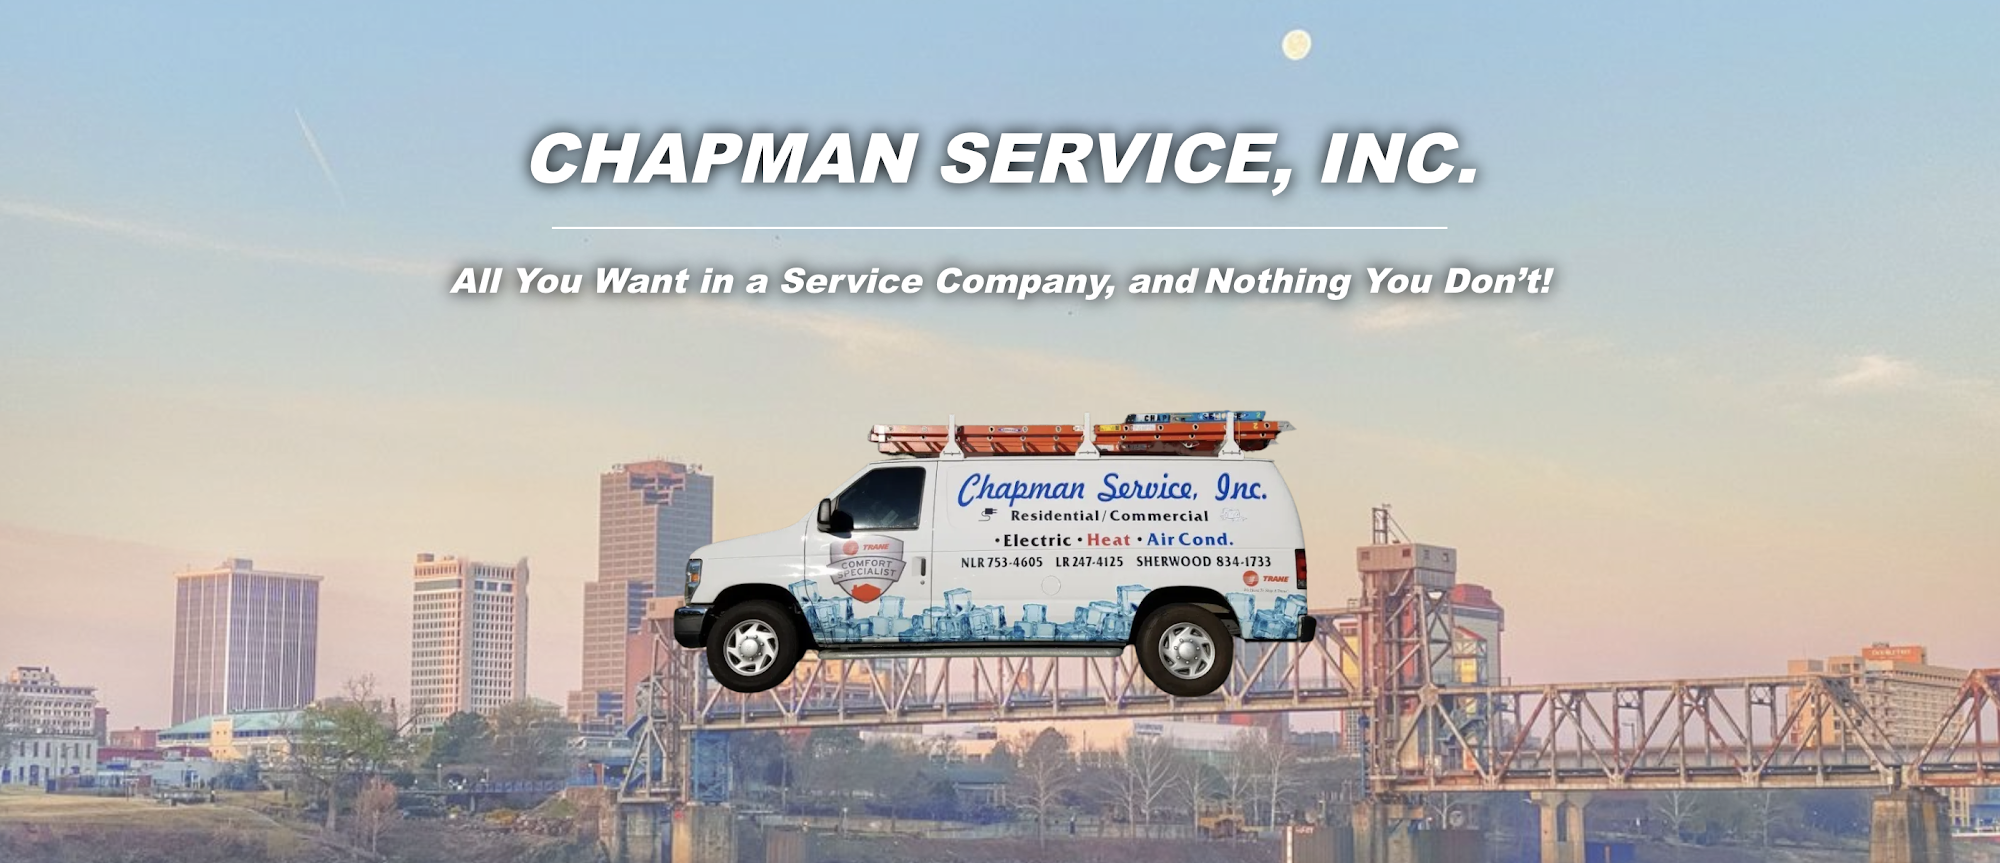 Chapman Service Inc